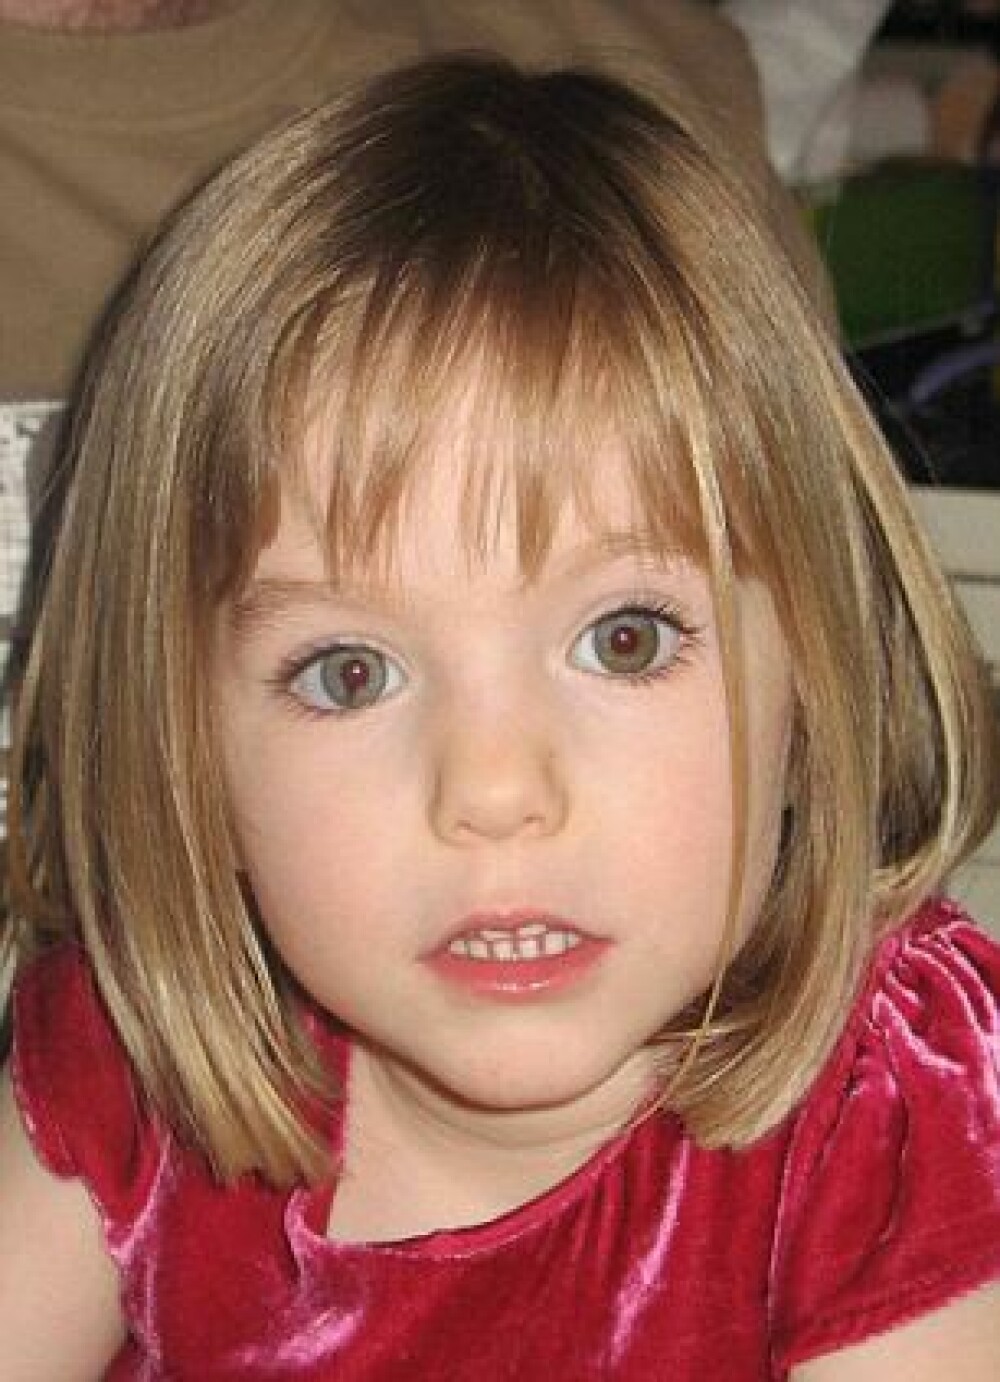 Anunt dureros pentru parintii micutei Maddie McCann, fetita disparuta acum 5 ani - Imaginea 1